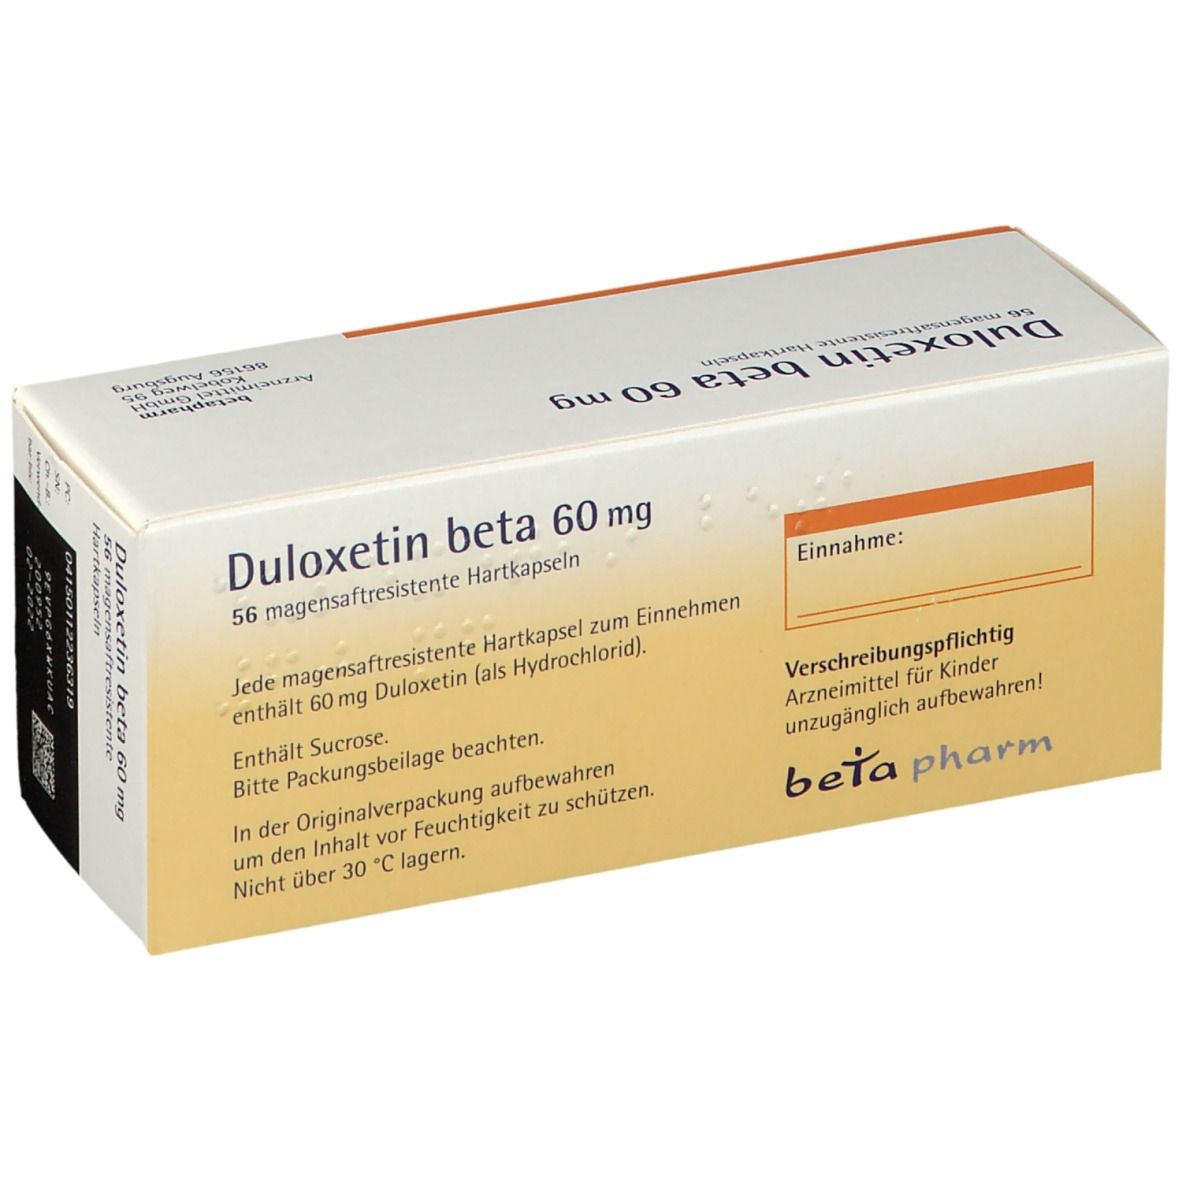 Duloxetin beta 60 mg